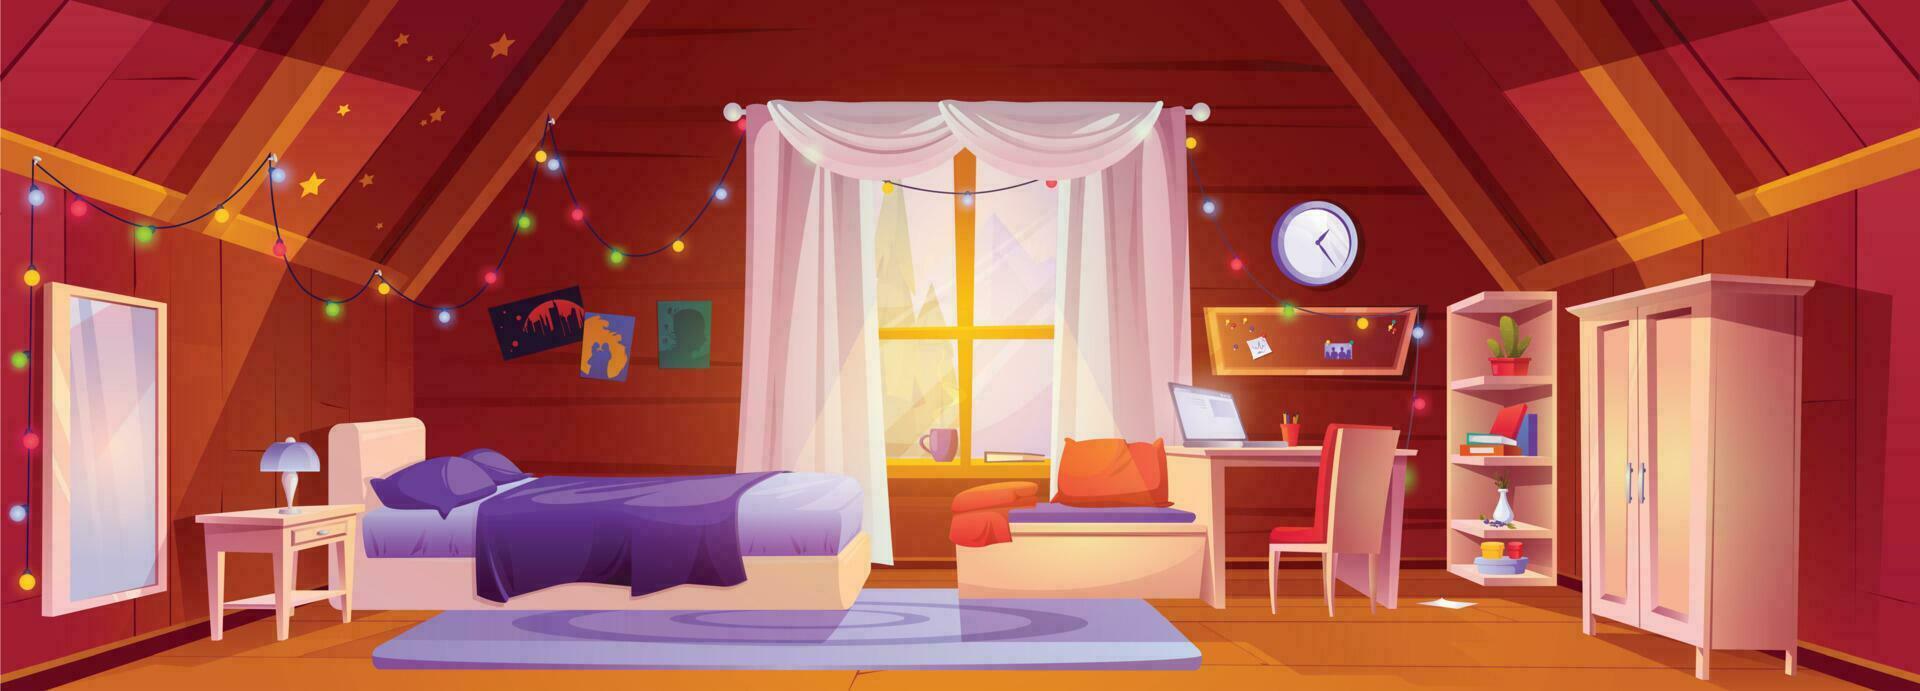 ático niña dormitorio interior con escritorio dibujos animados vector